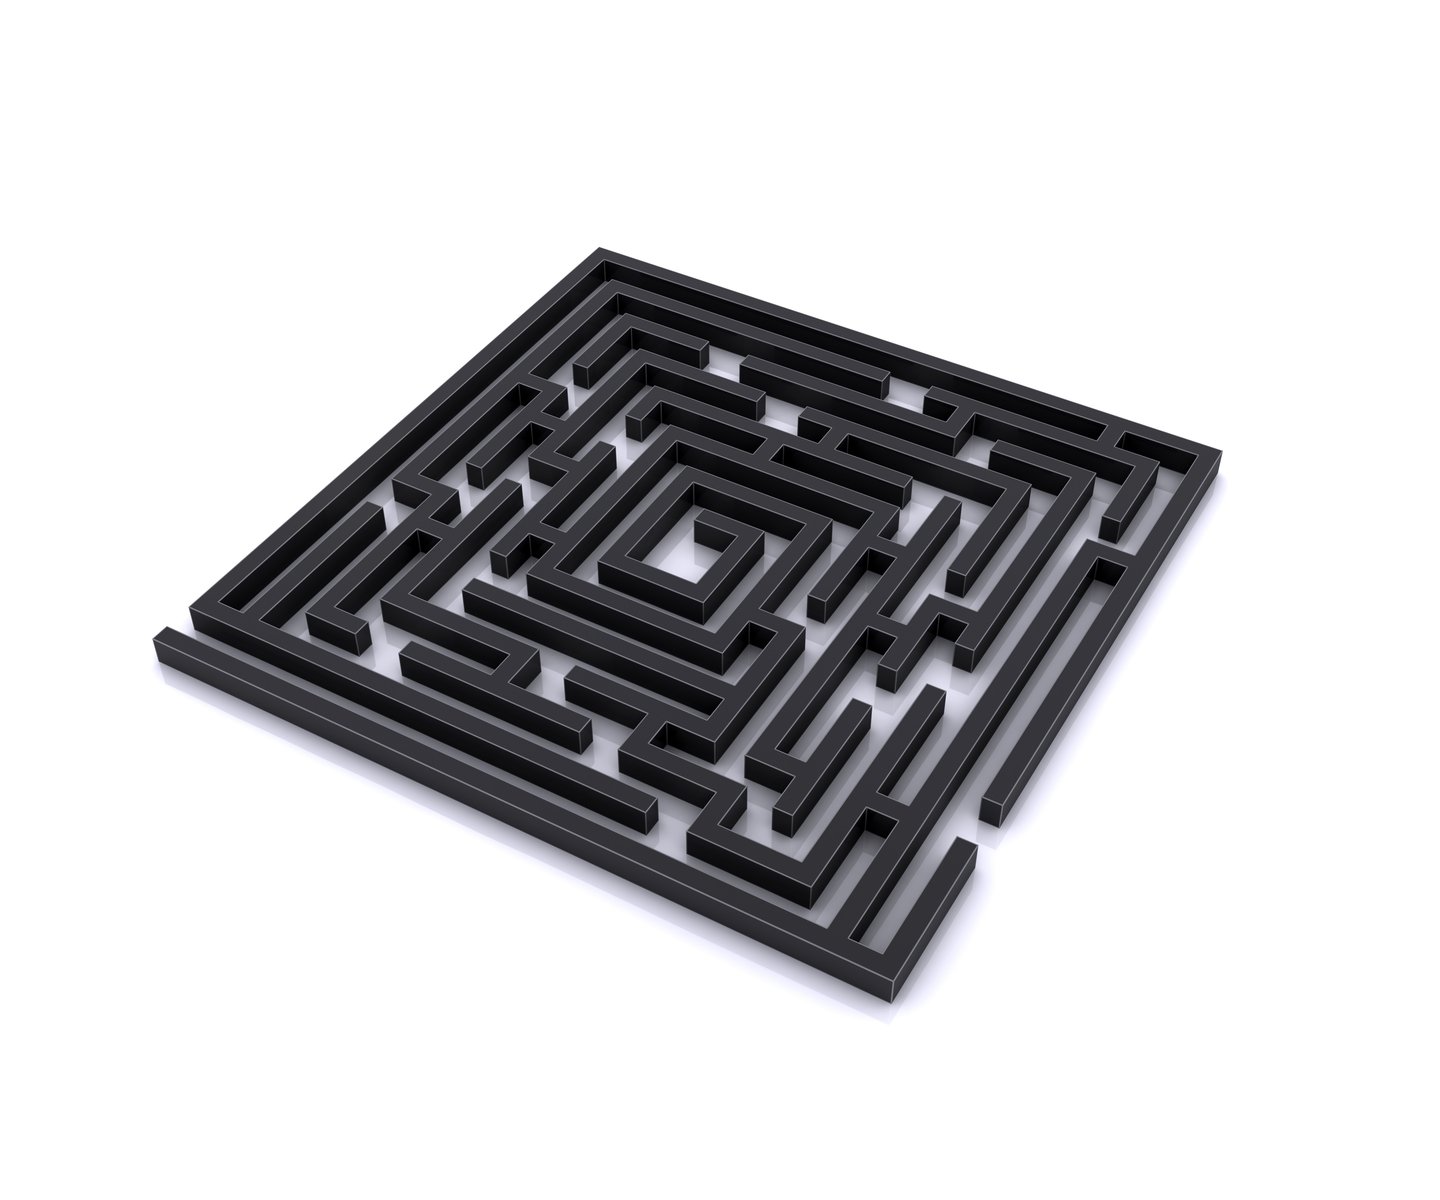 a black square maze on a white background